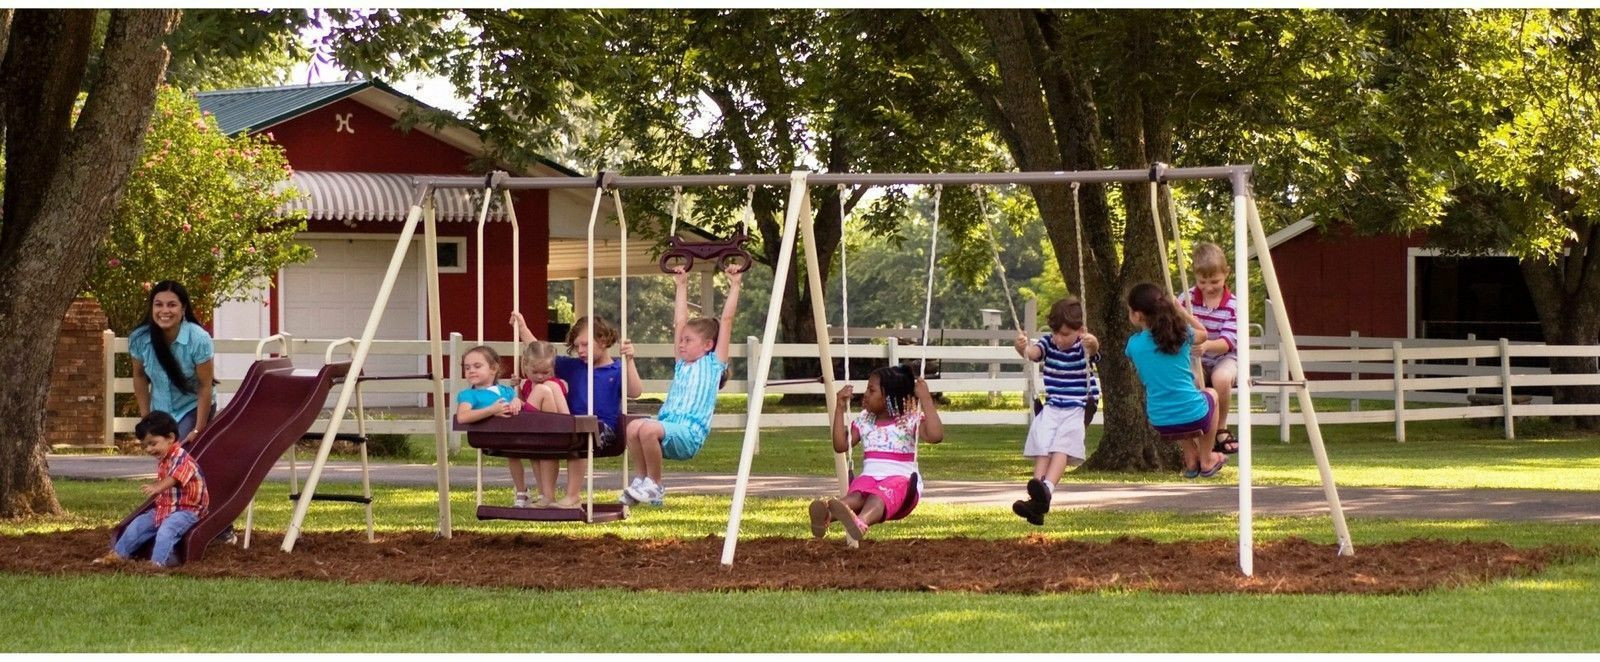 Kids Outdoor Swing Set
 Swing Set Outdoor Kids Children Backyard Slide Ladder